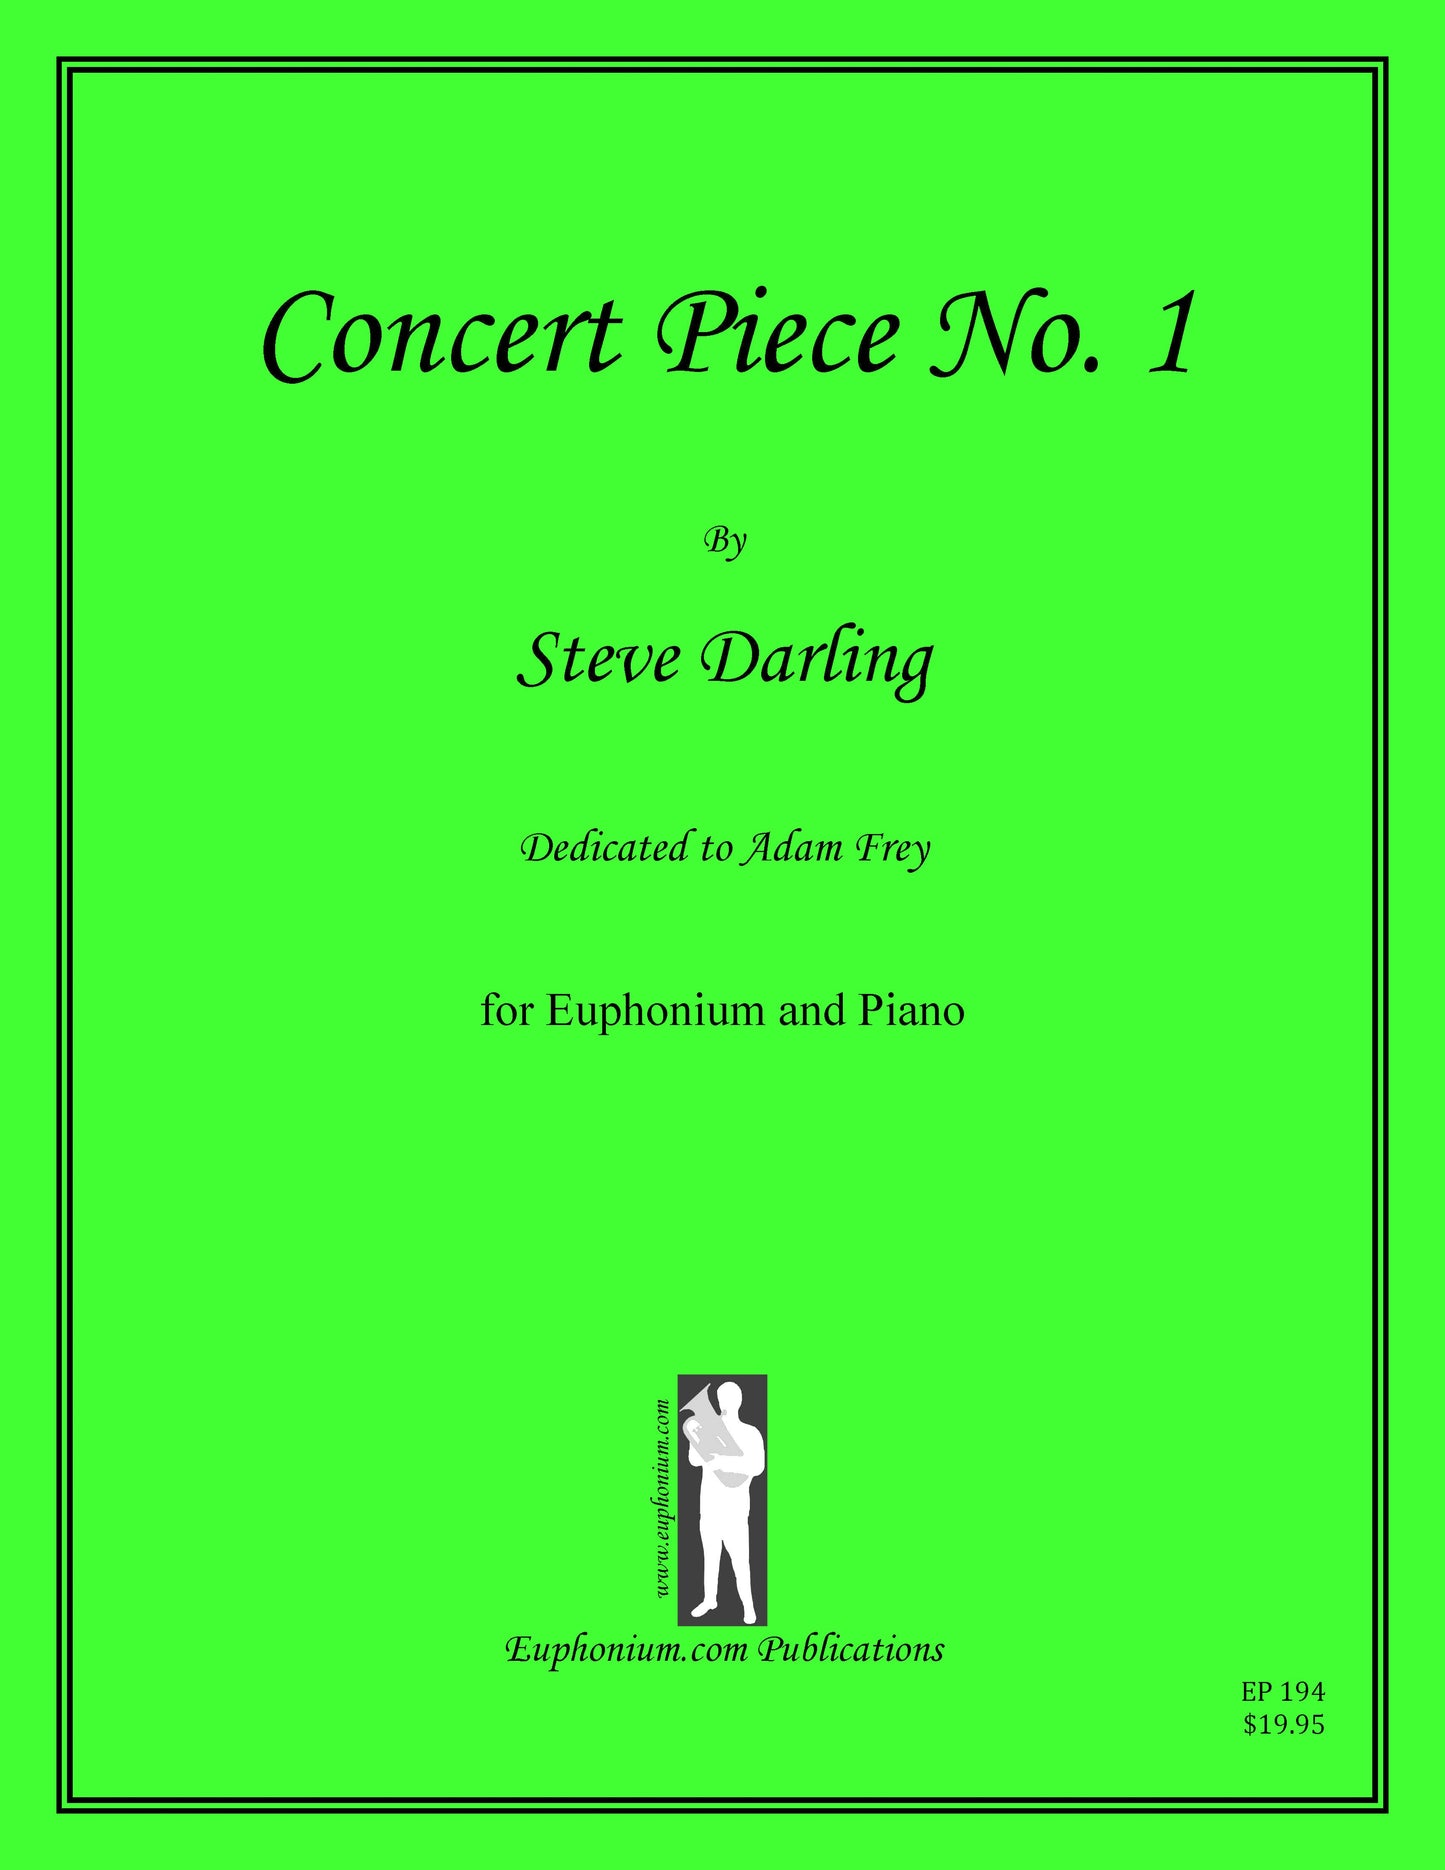 Darling - Concert Piece No. 1 - DOWNLOAD